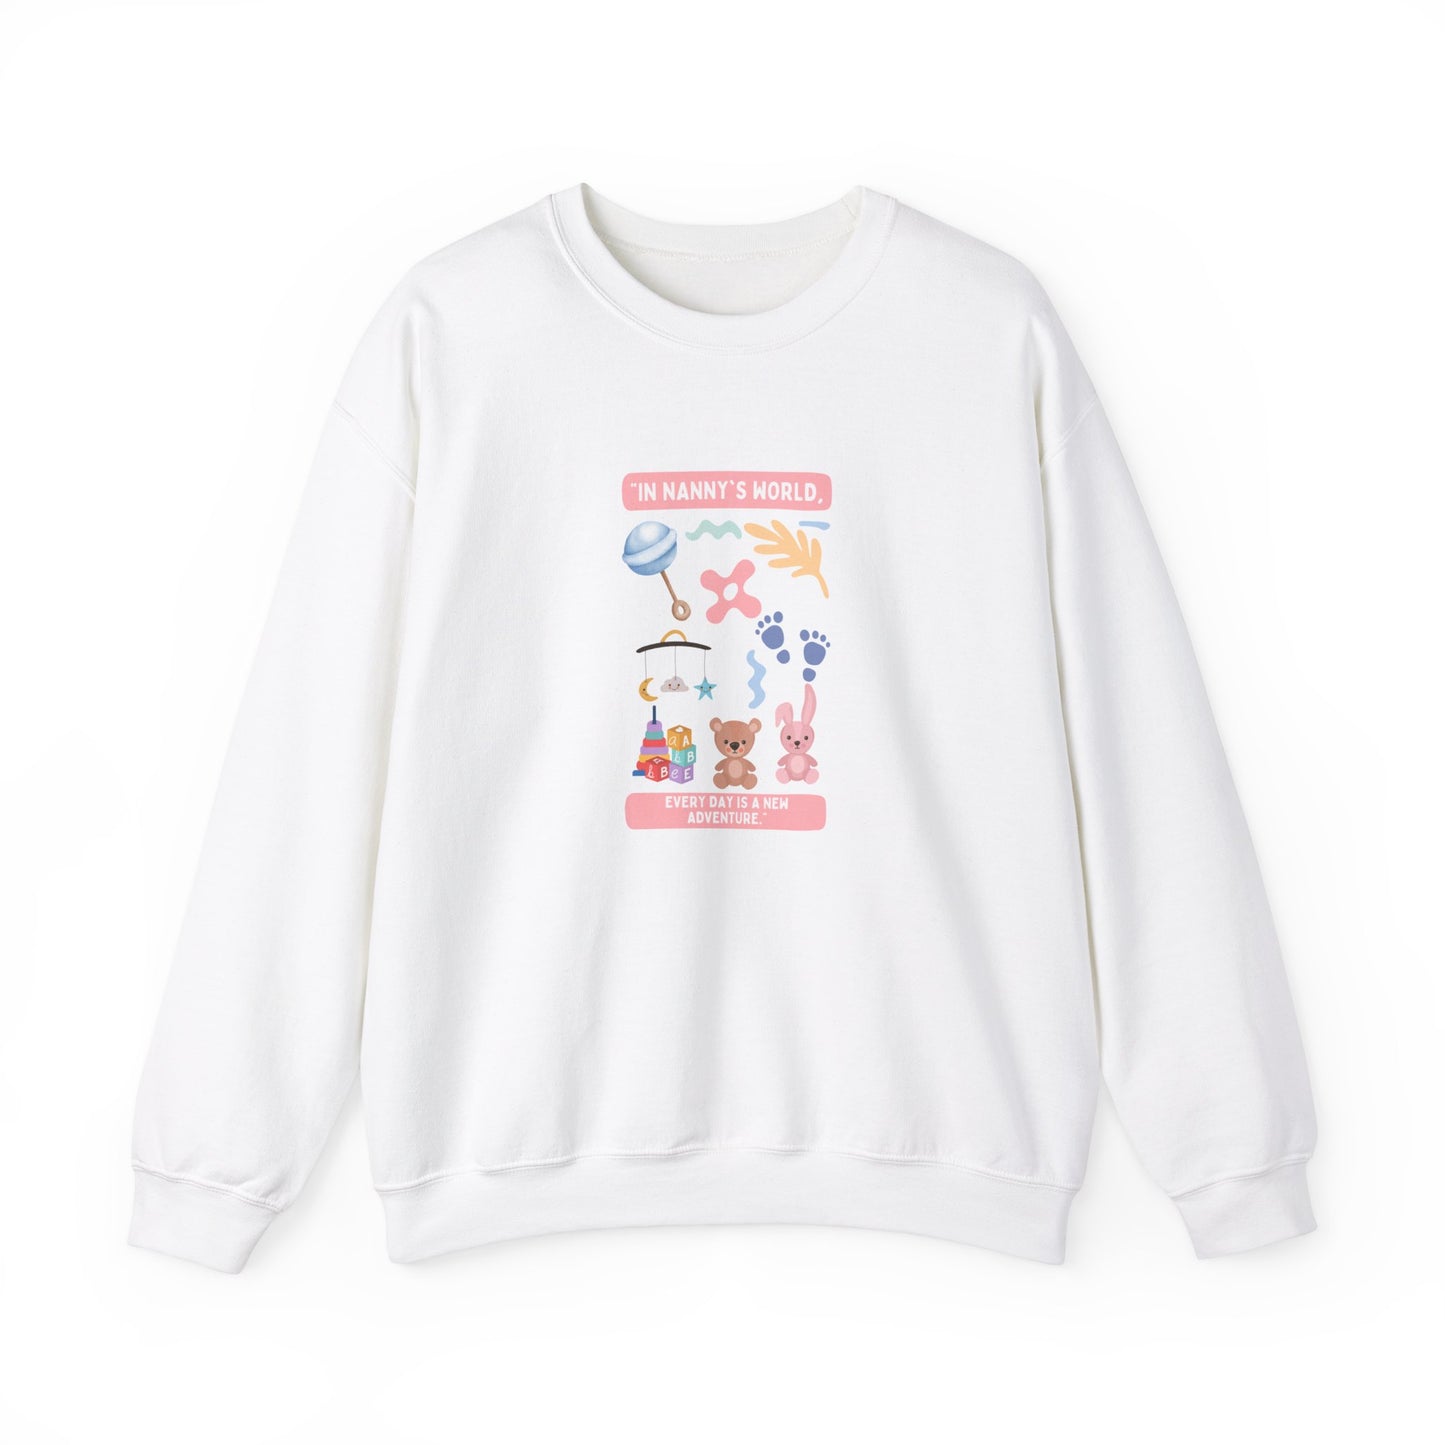 Nanny's World Crewneck Sweatshirt